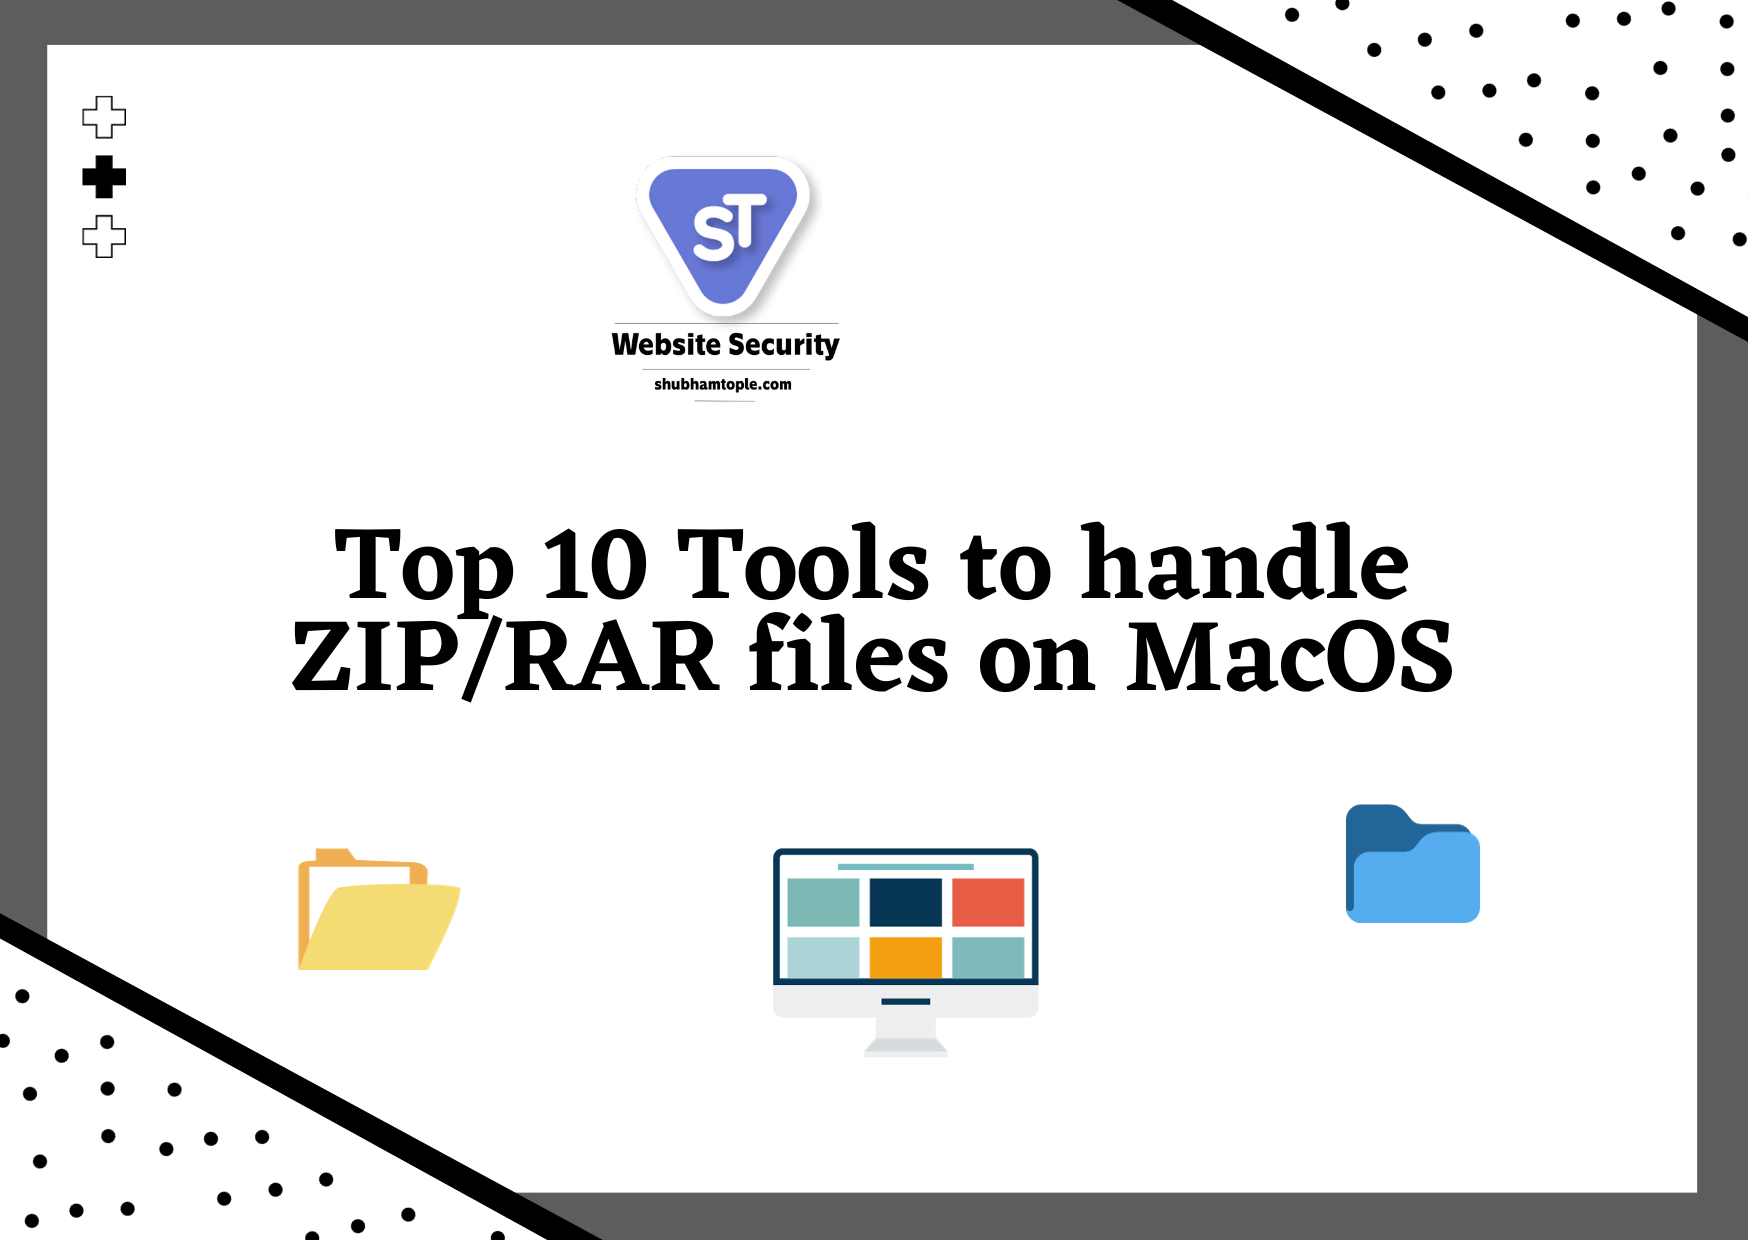 Tools to handle ZIP/RAR files on MacOS